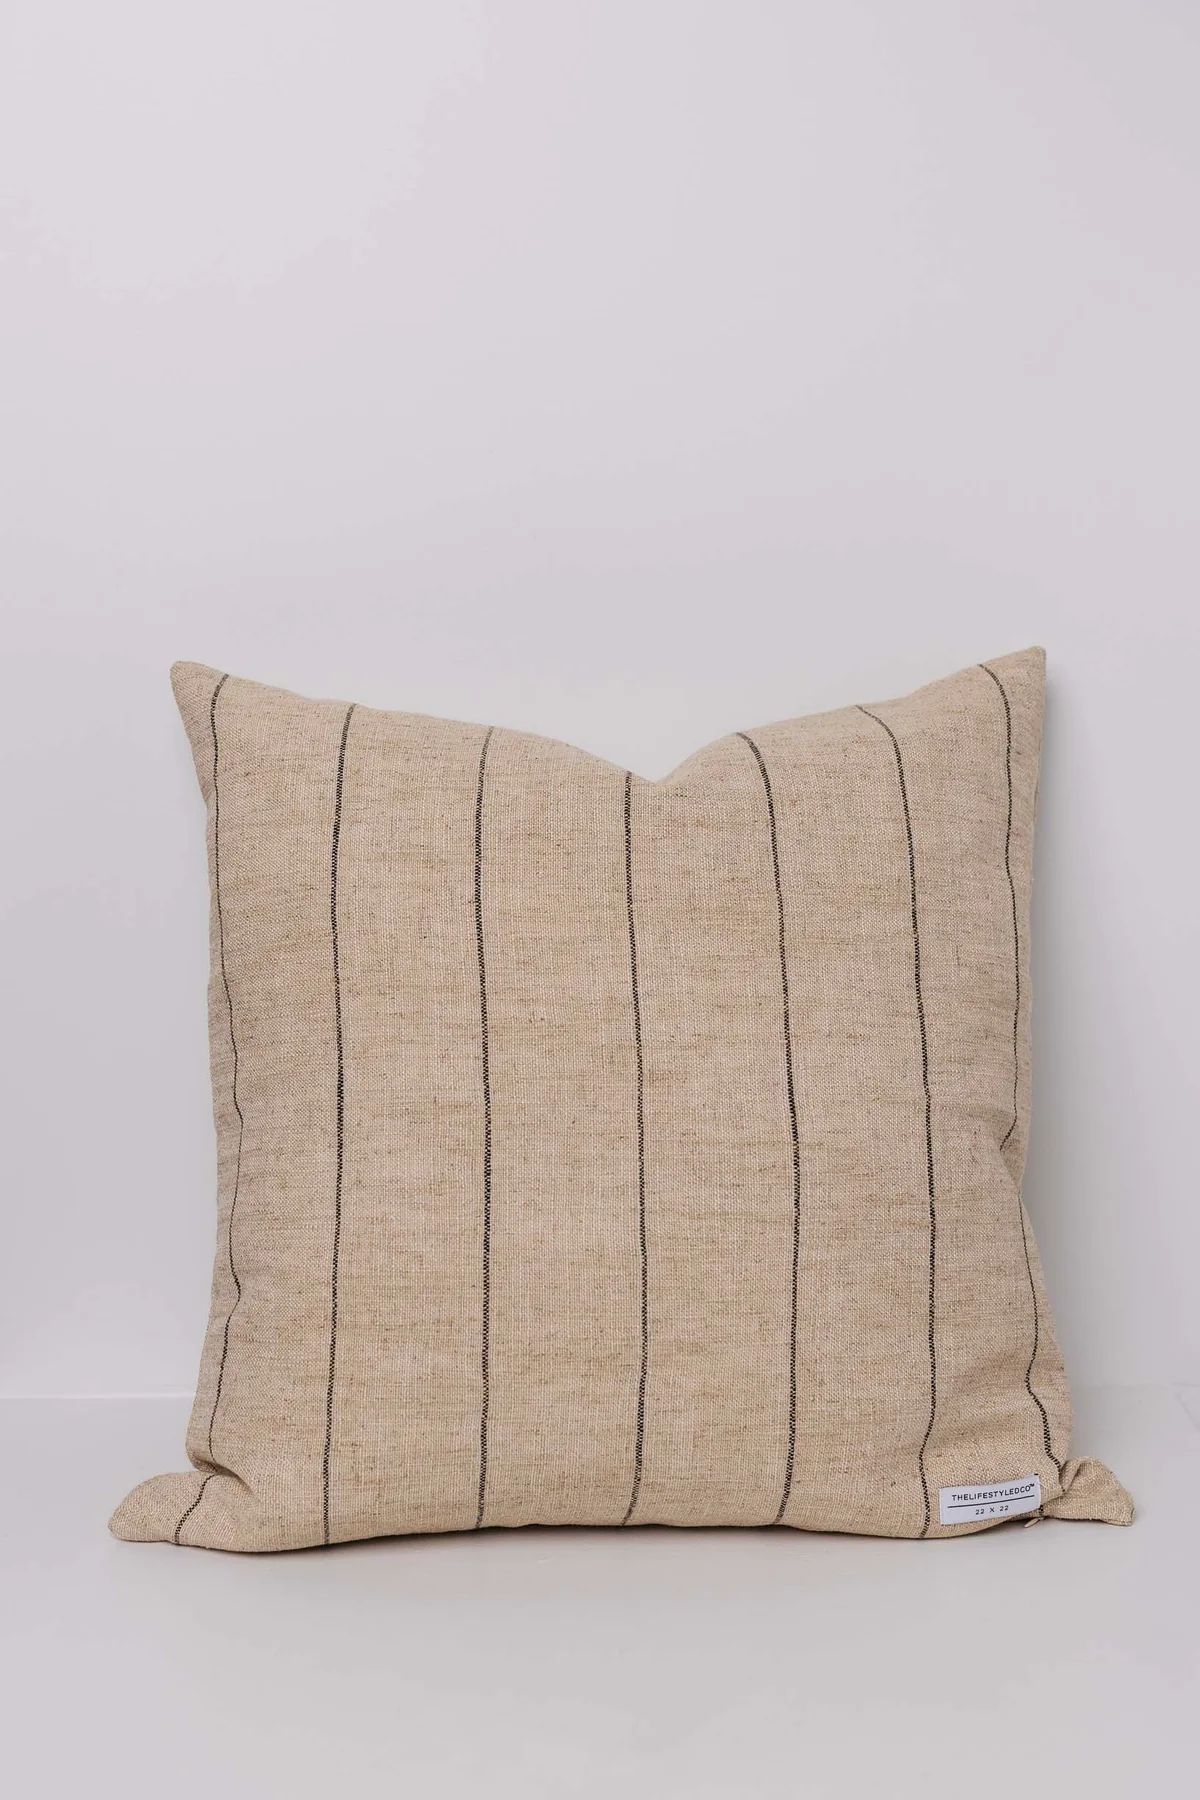 Arvin Burlap Linen Stripe Pillow - 2 Sizes | THELIFESTYLEDCO